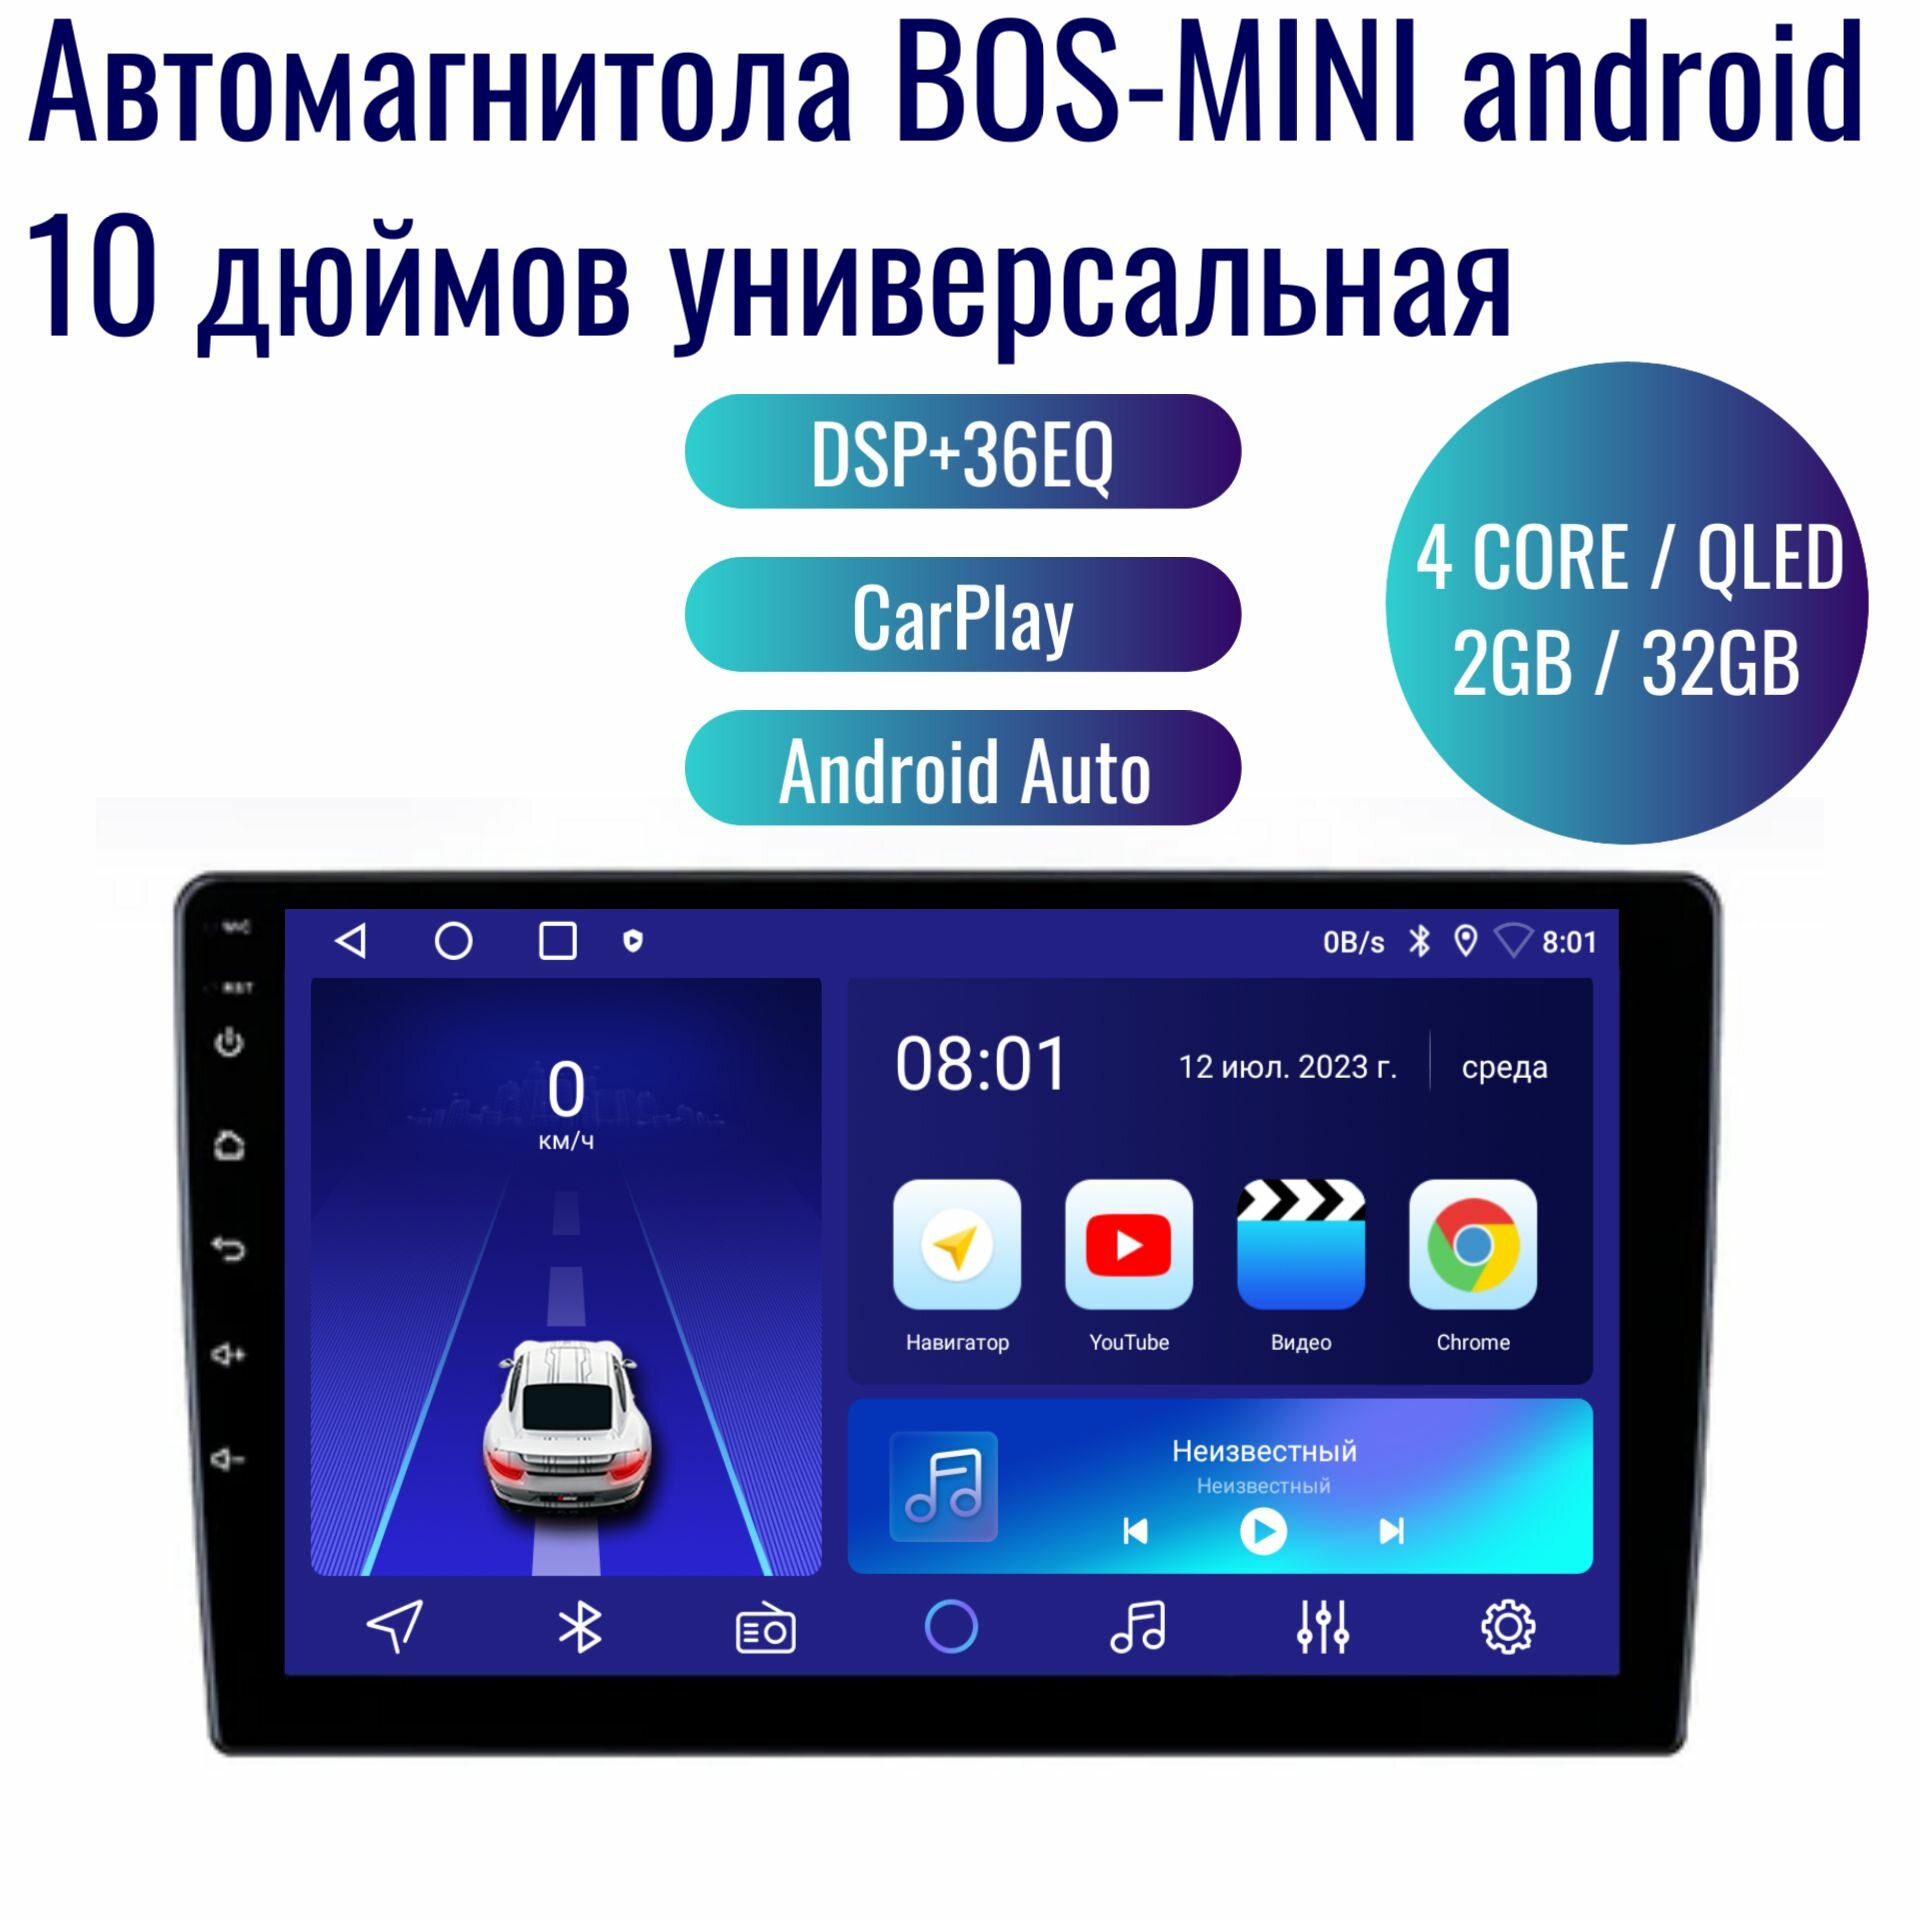 Автомагнитола BOS-MINI A3 PRO Android универсальная / 4 ядер 2Gb+32Gb /10 дюймов/GPS/Bluetooth/Wi-Fi/ 2din/навигатор/CarPlay Android Auto